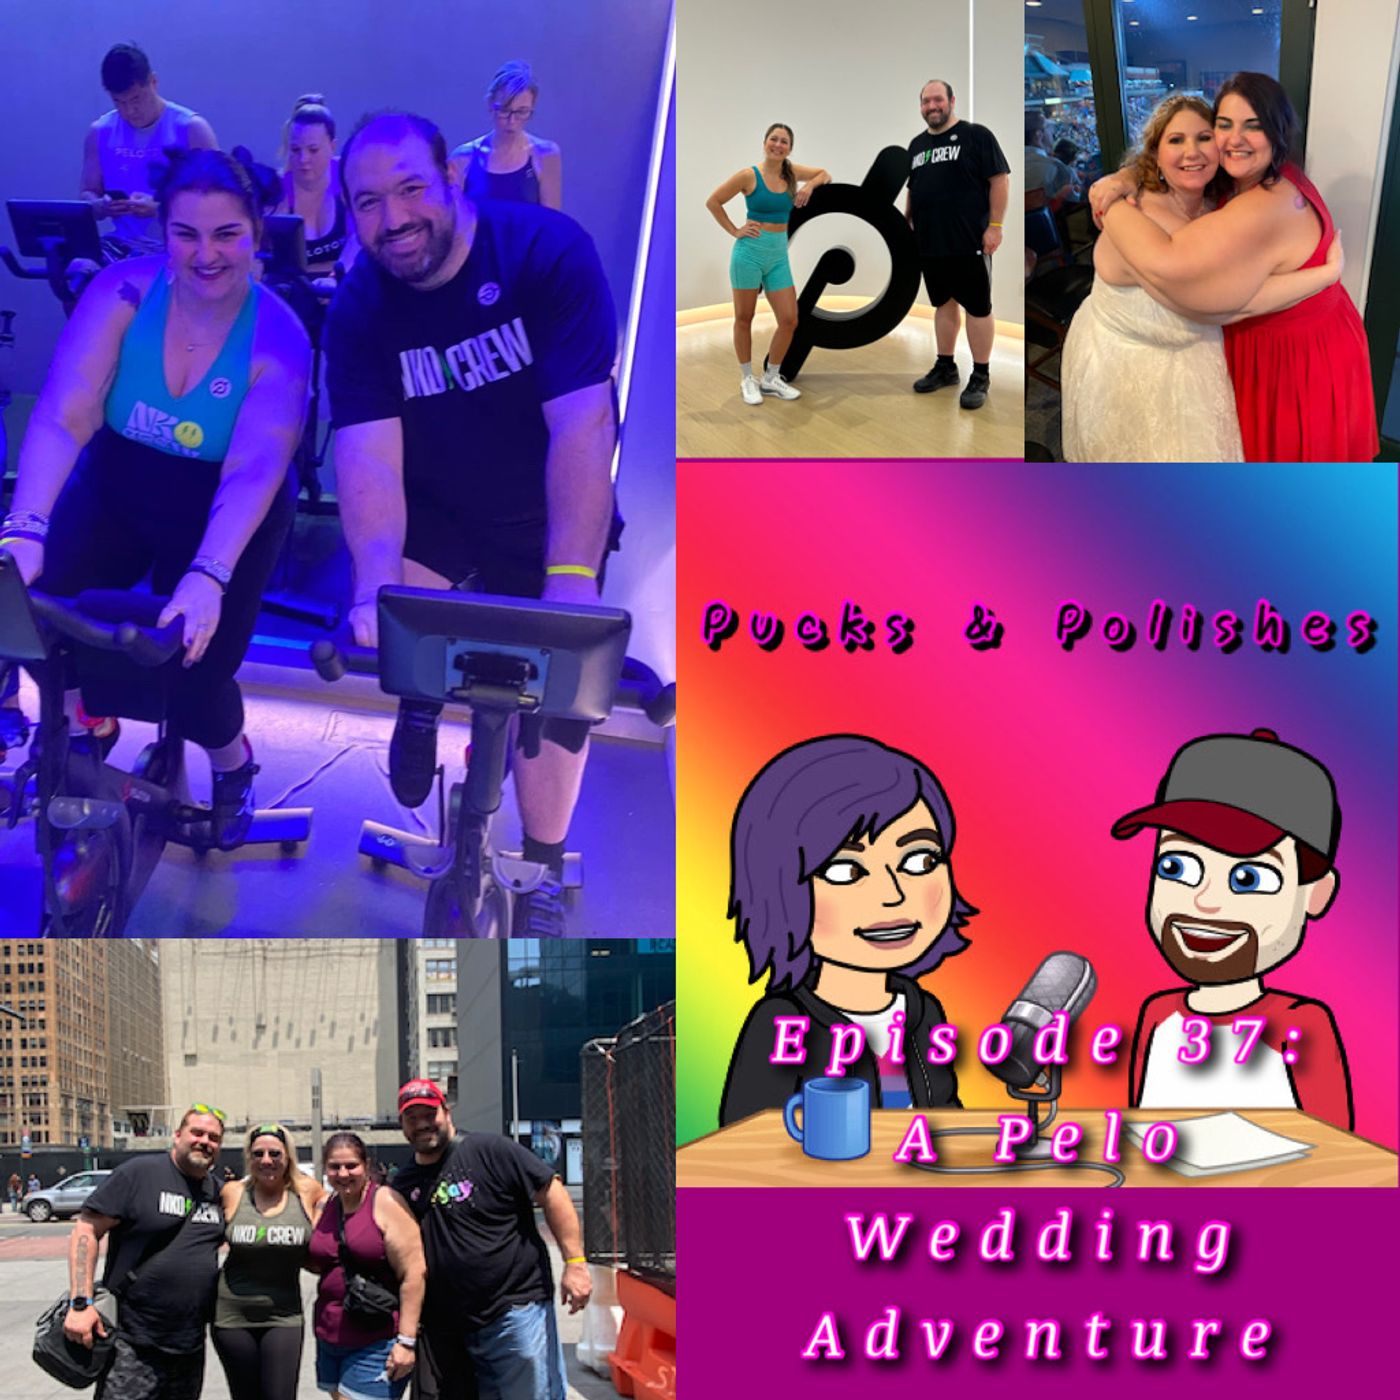 P&P Episode 37: A Pelo Wedding Adventure